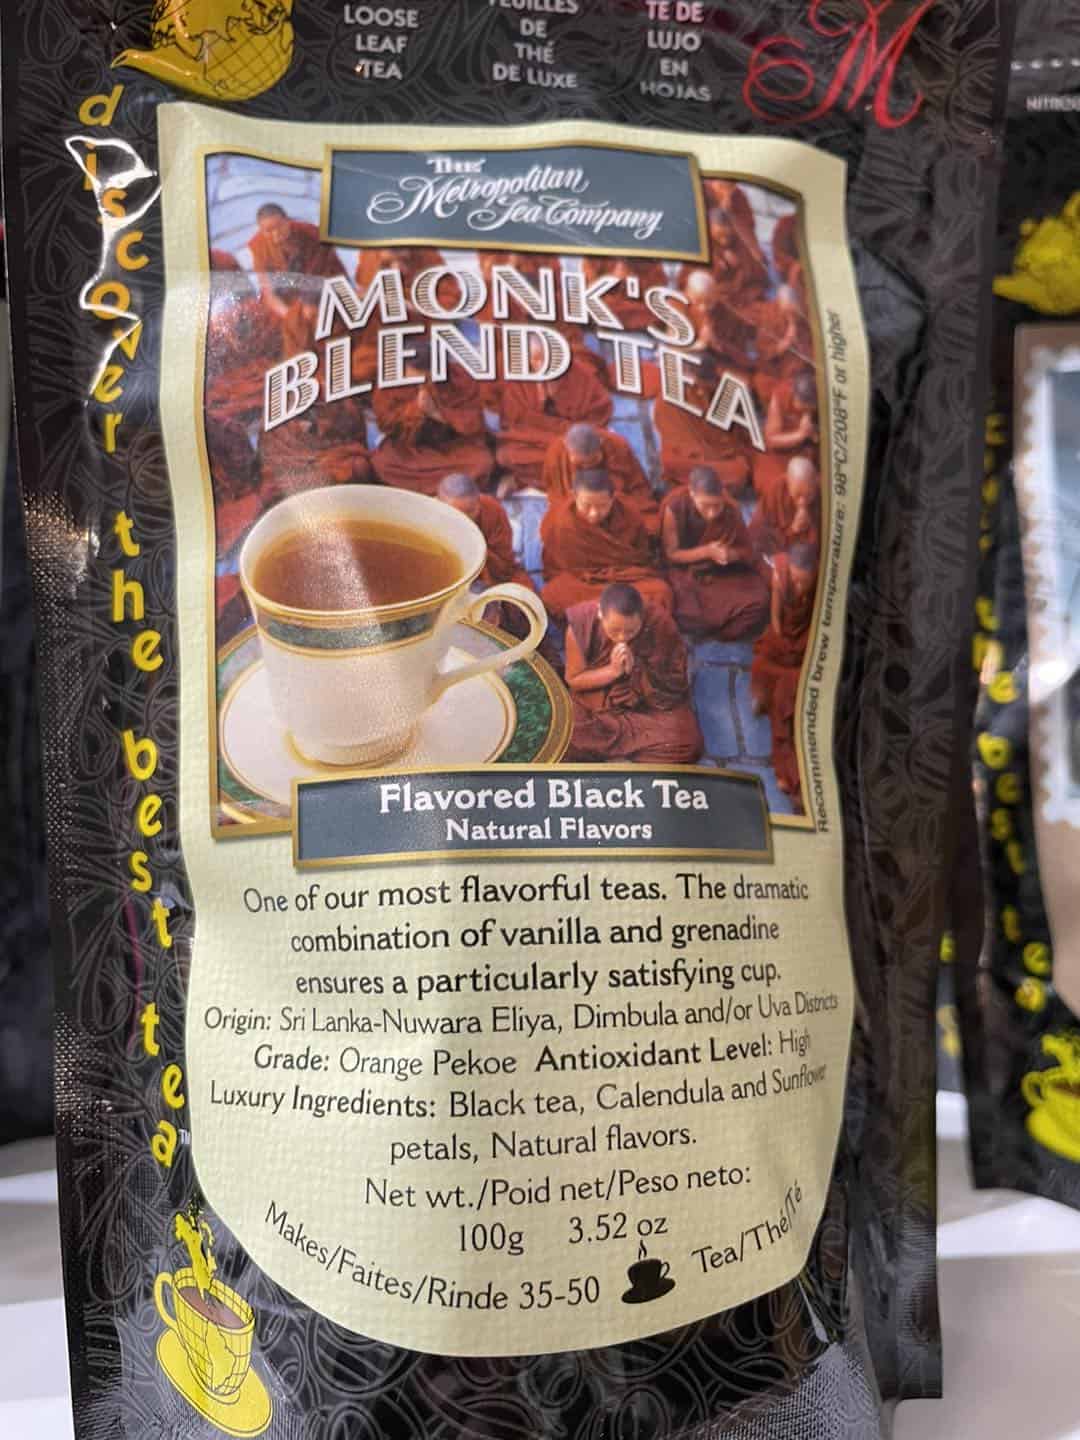 Monk's Blend